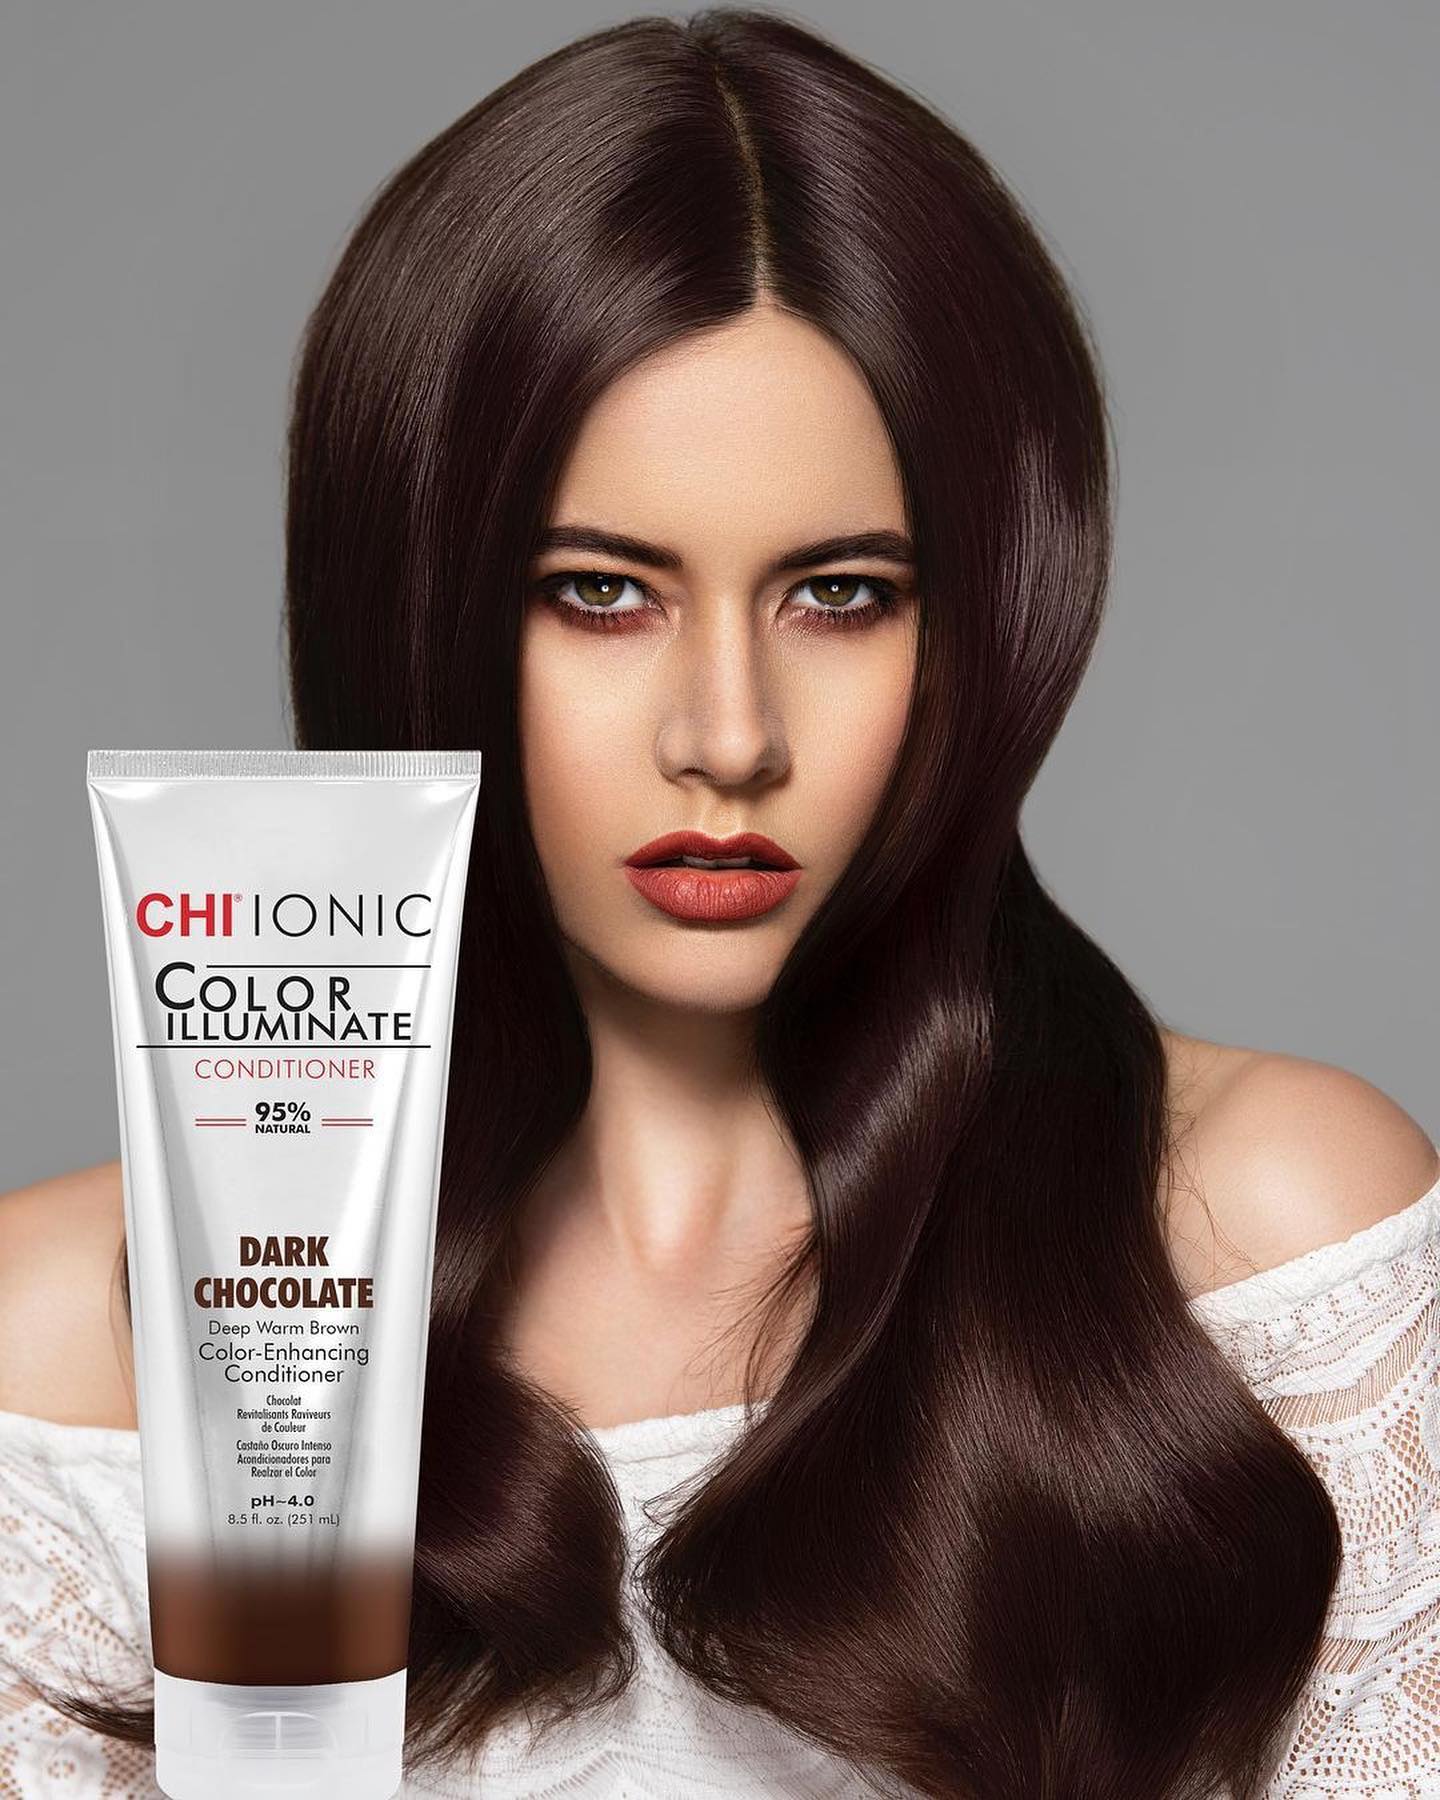 CHI Ionic Color Illuminate - Лучший уход за окрашенными волосами